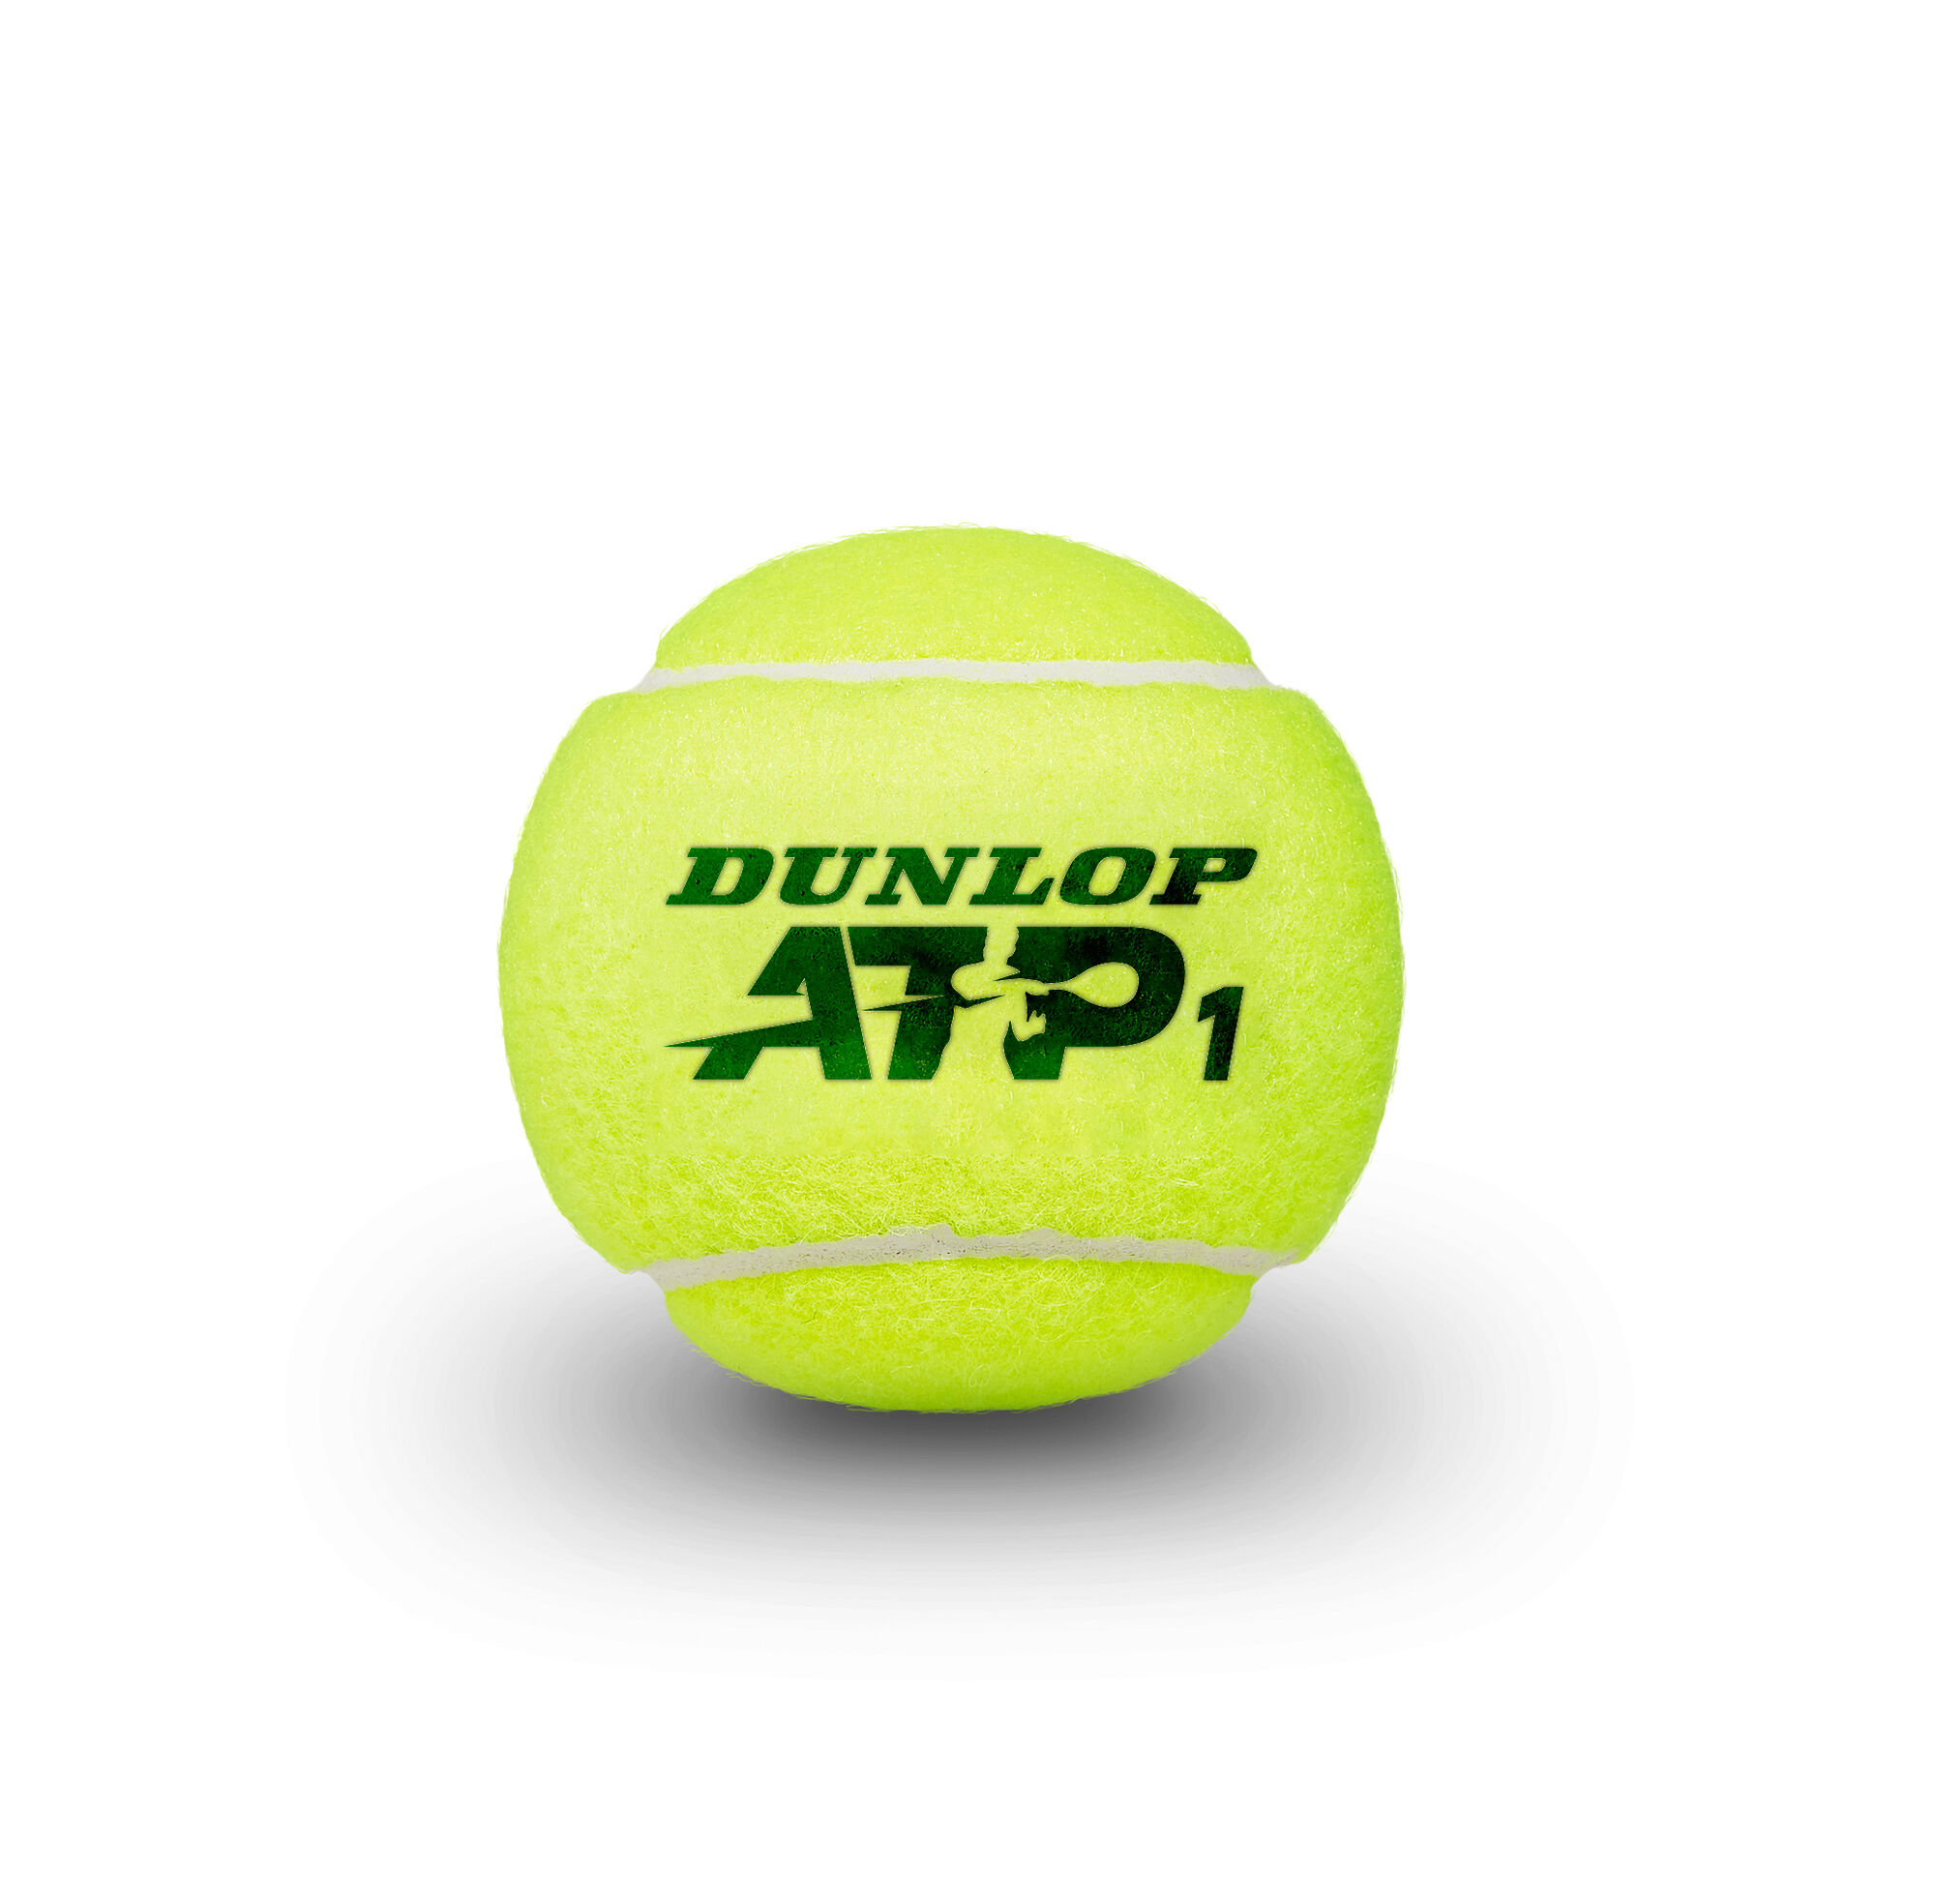 Buy Dunlop ATP Bote De 4 Pelotas online